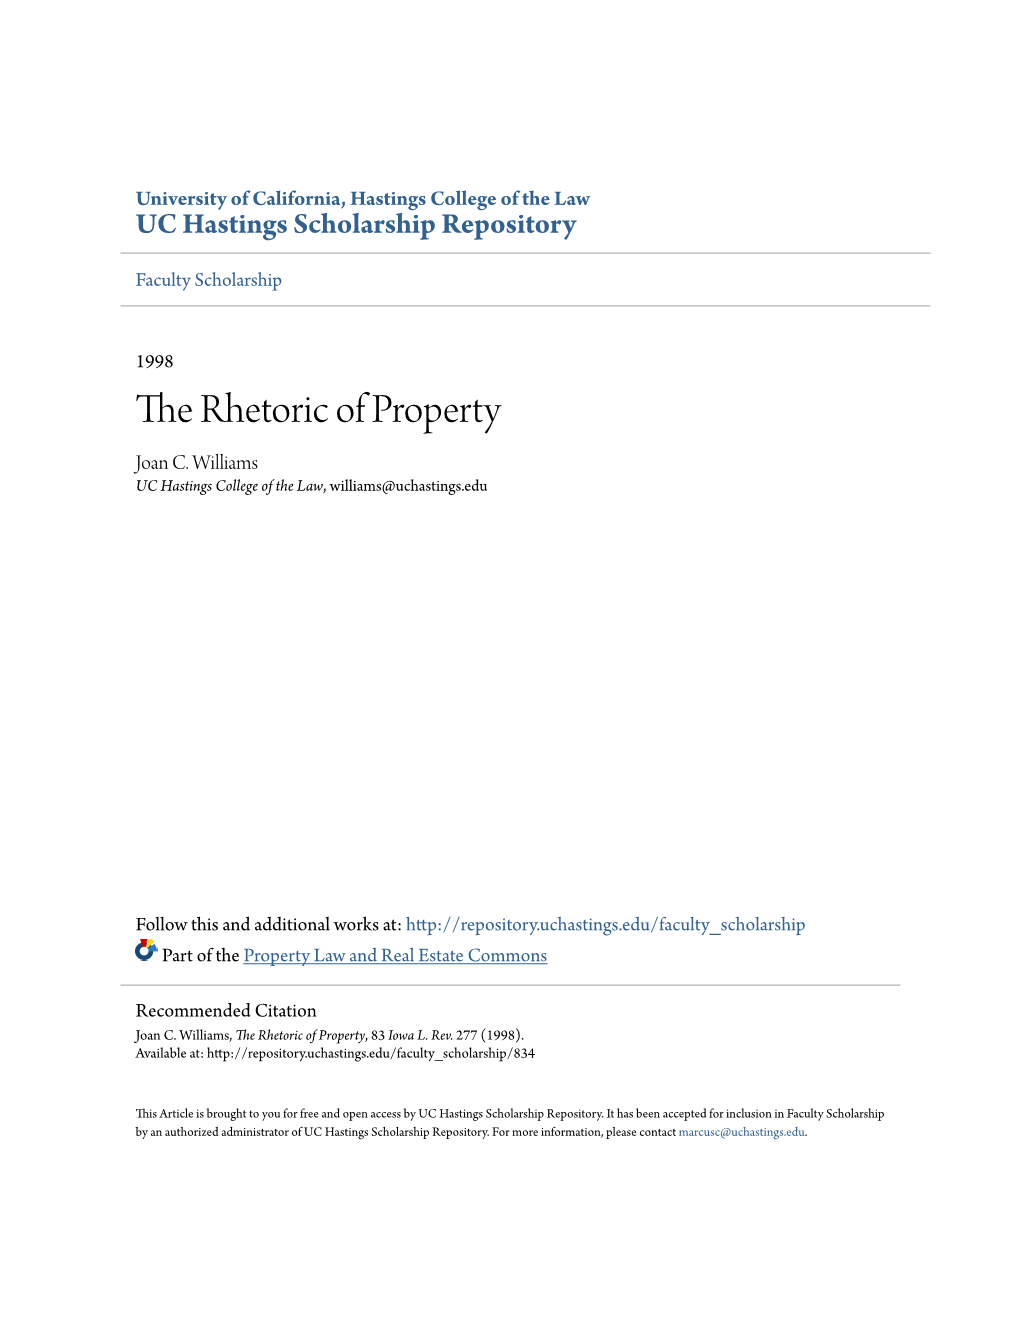 The Rhetoric of Property Joan C